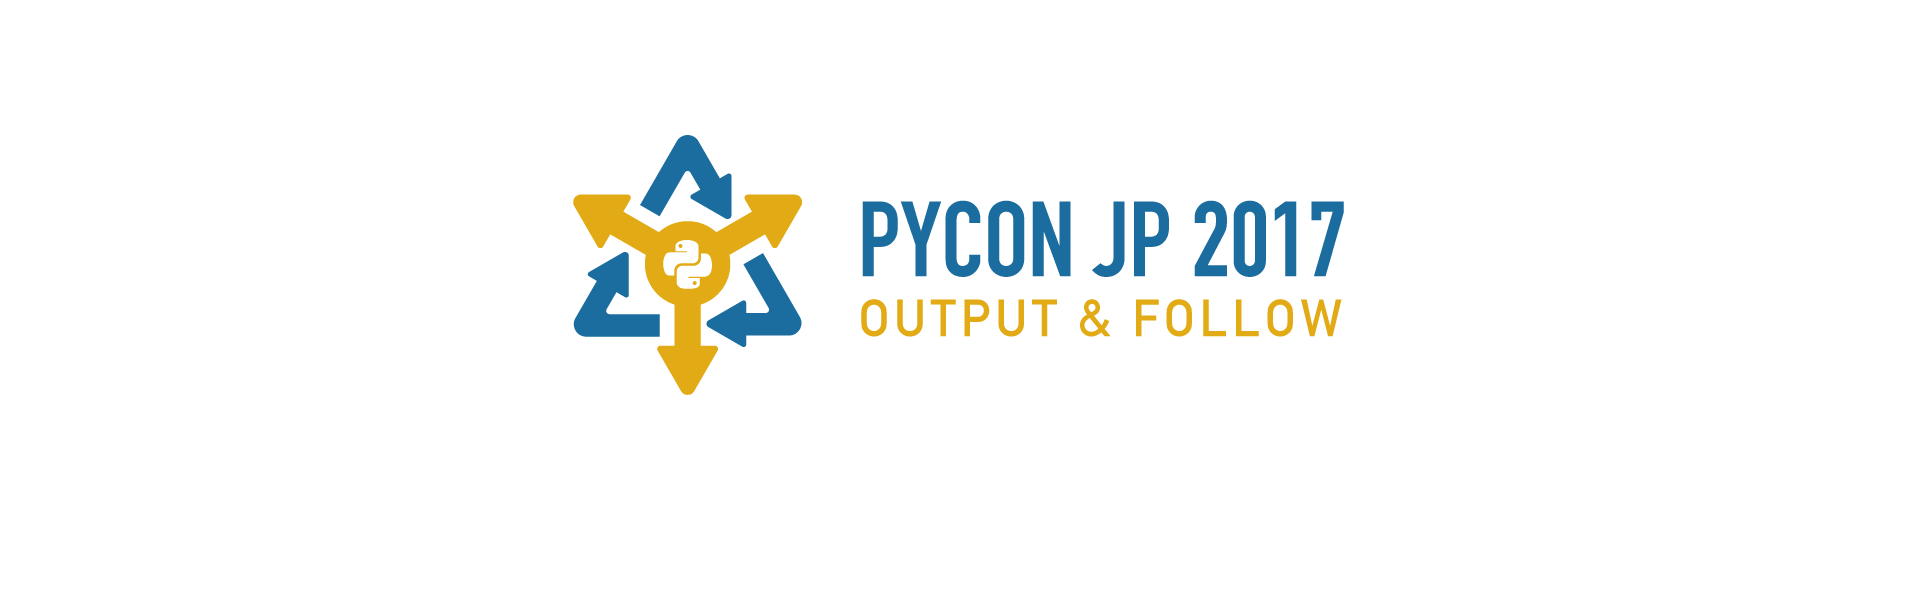 pyconjp2017